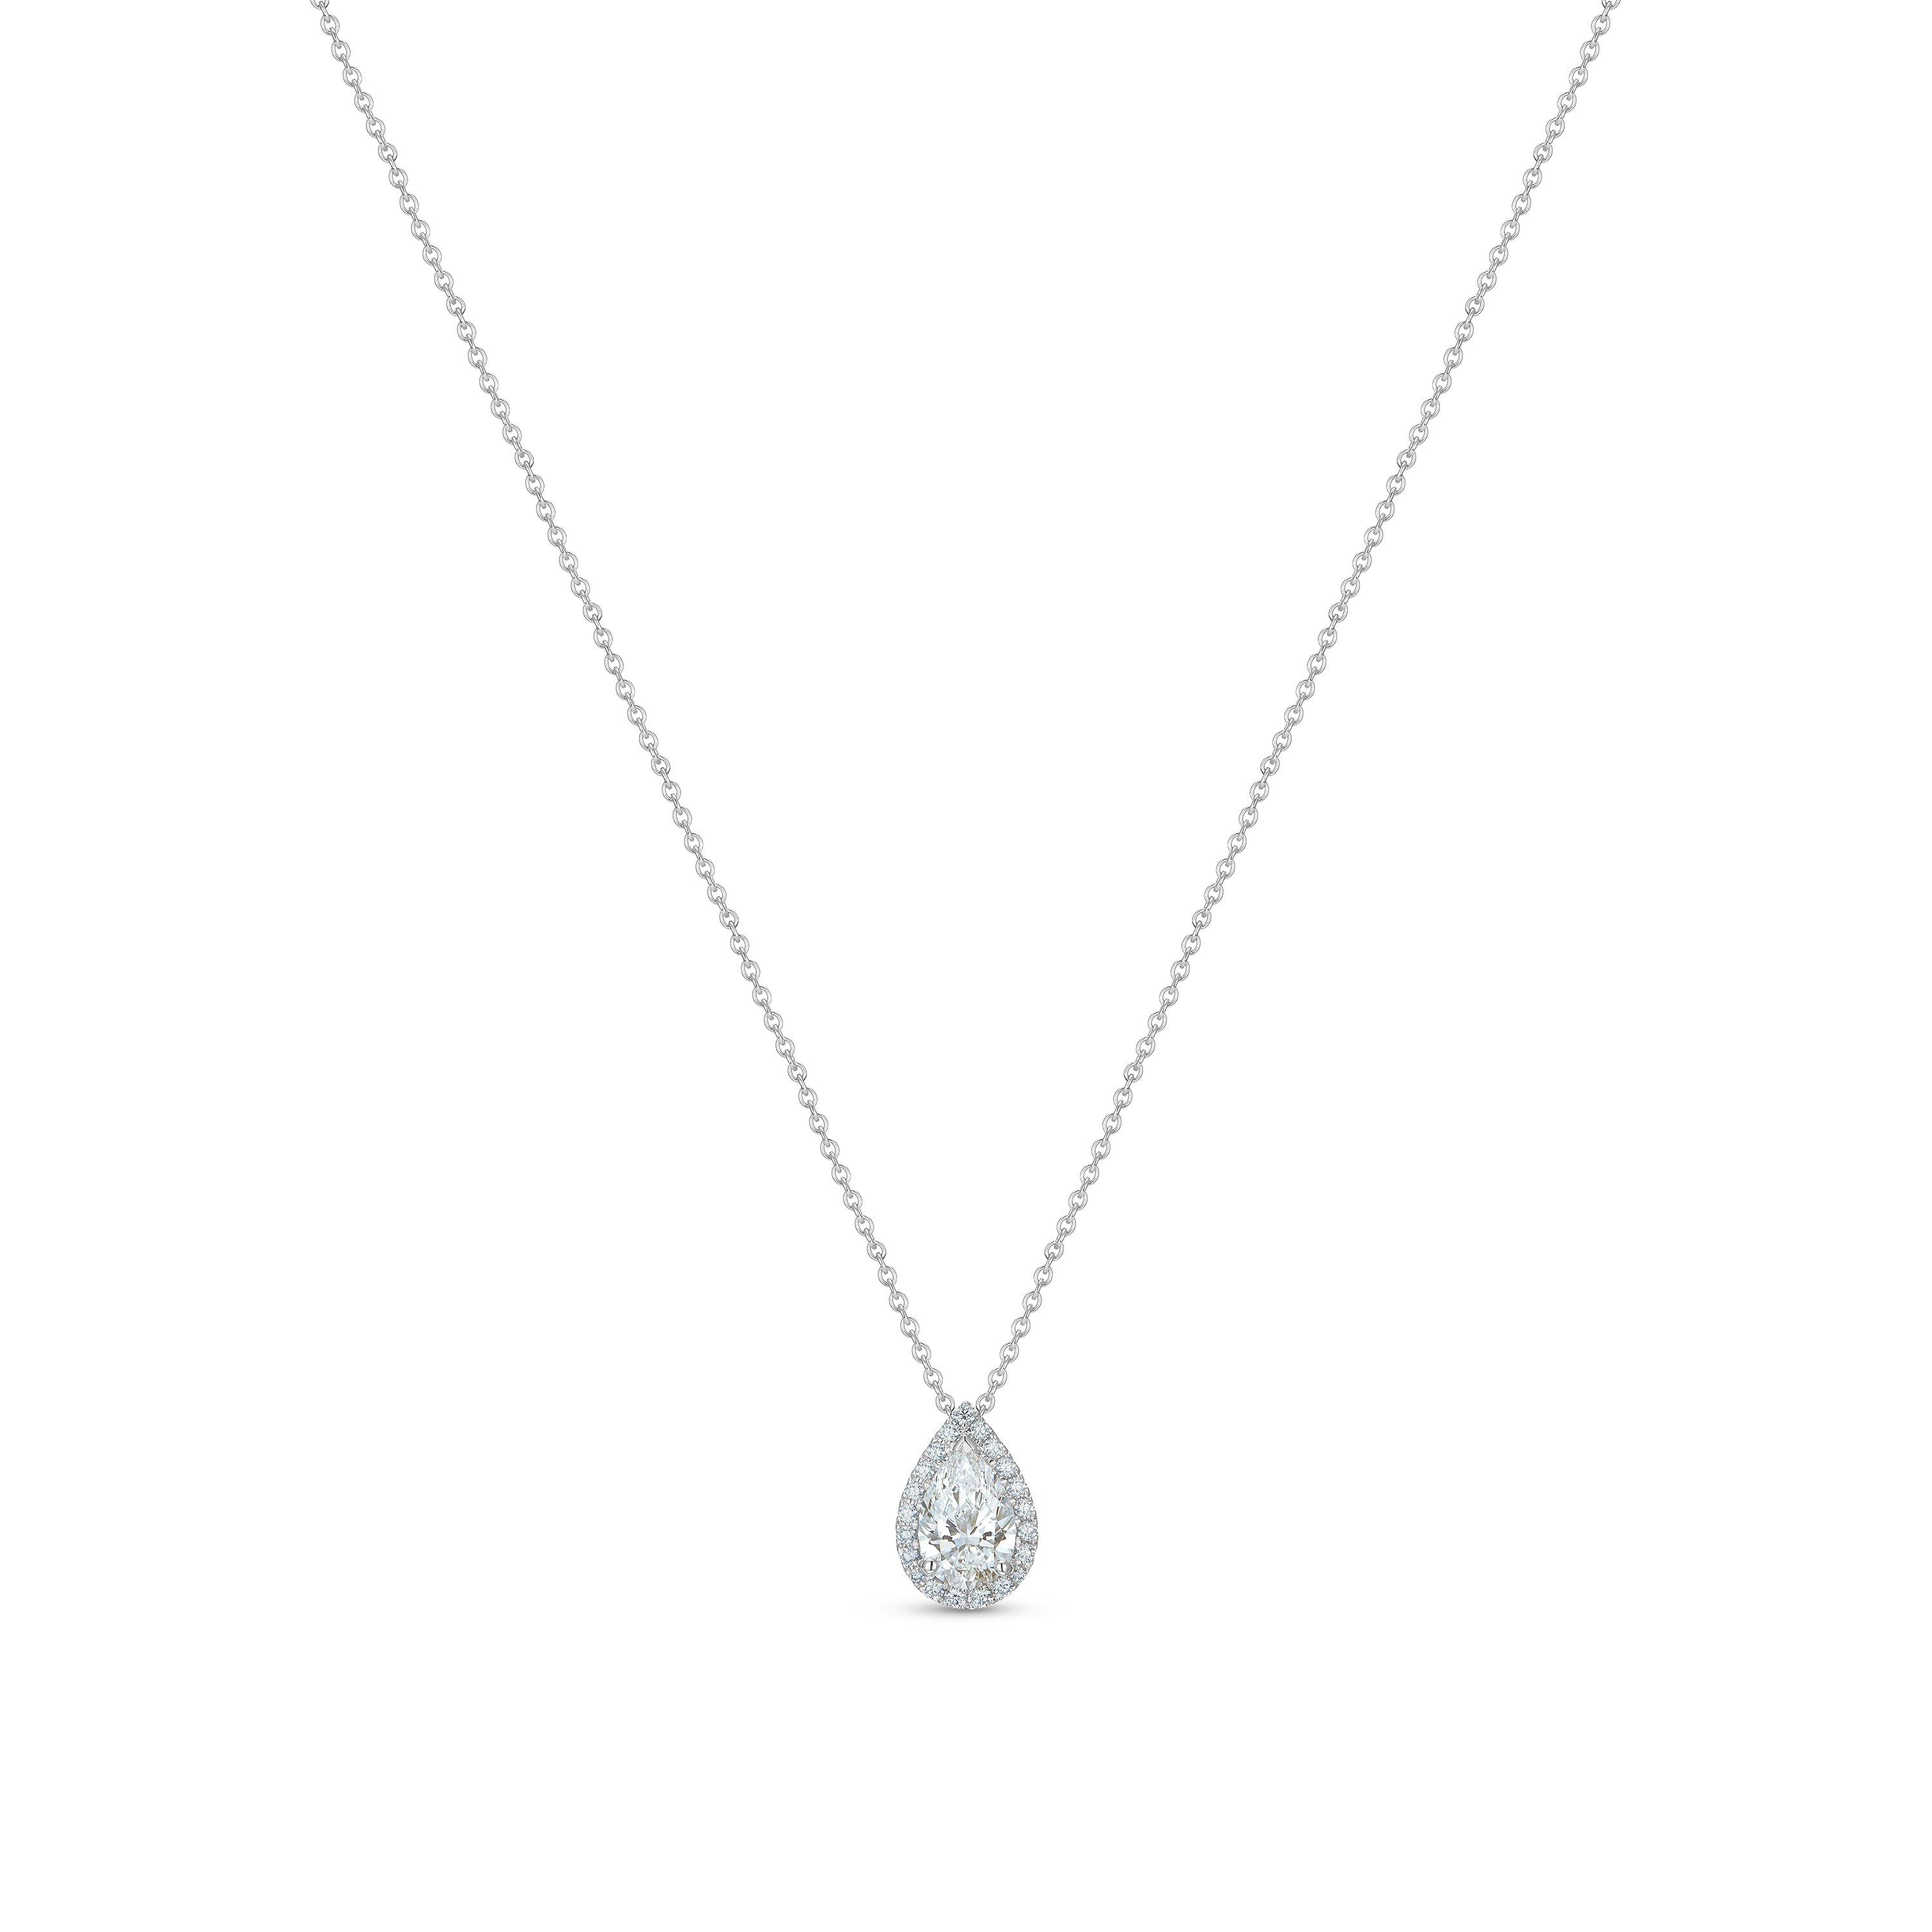 Aura Pear-shaped Diamond Pendant